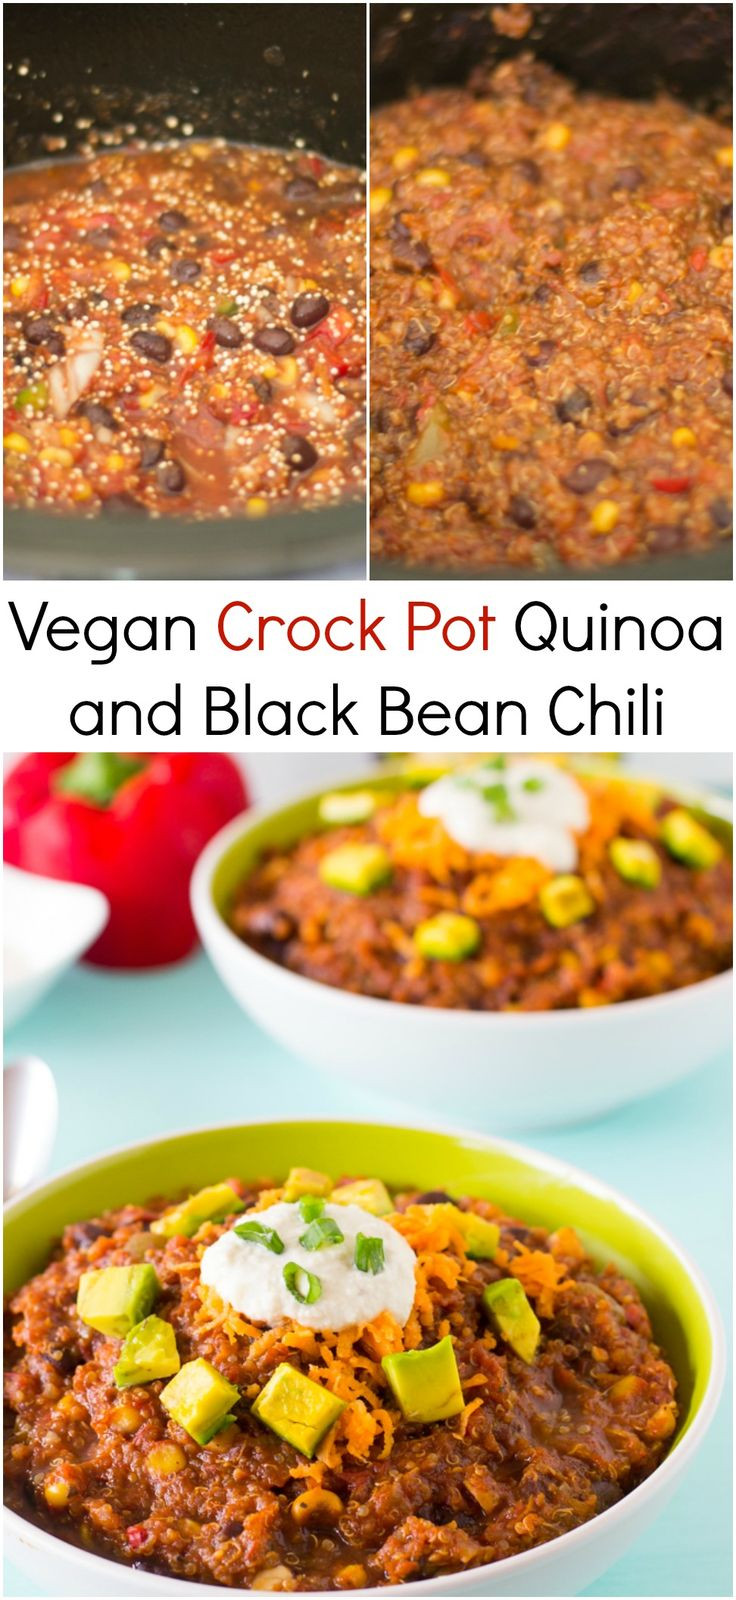 Vegetarian Crockpot Recipes
 17 Best images about Vegan Crockpot Recipes on Pinterest